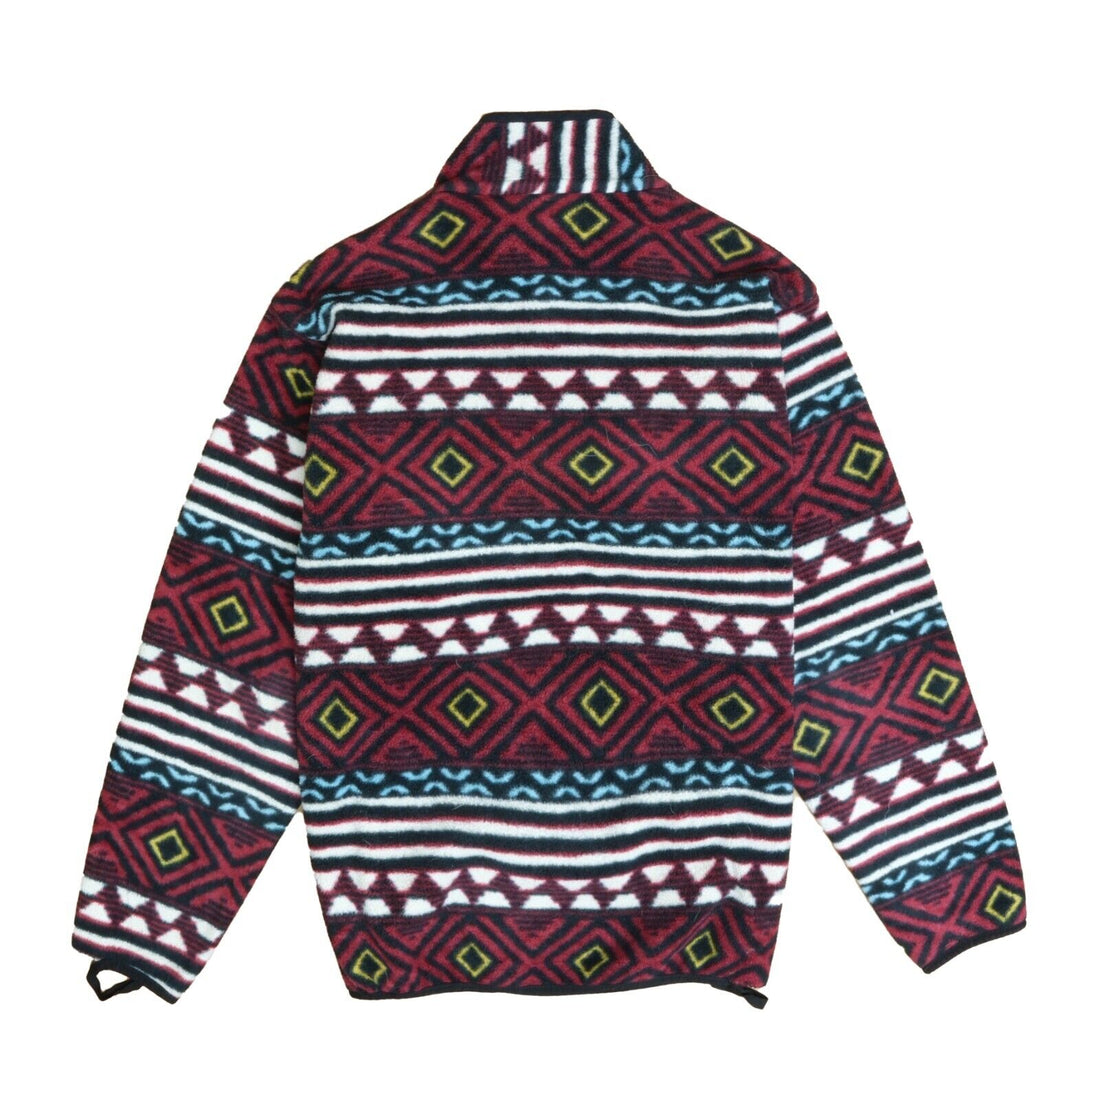 Vintage Patagonia Synchilla Snap-T Fleece Jacket Size Small